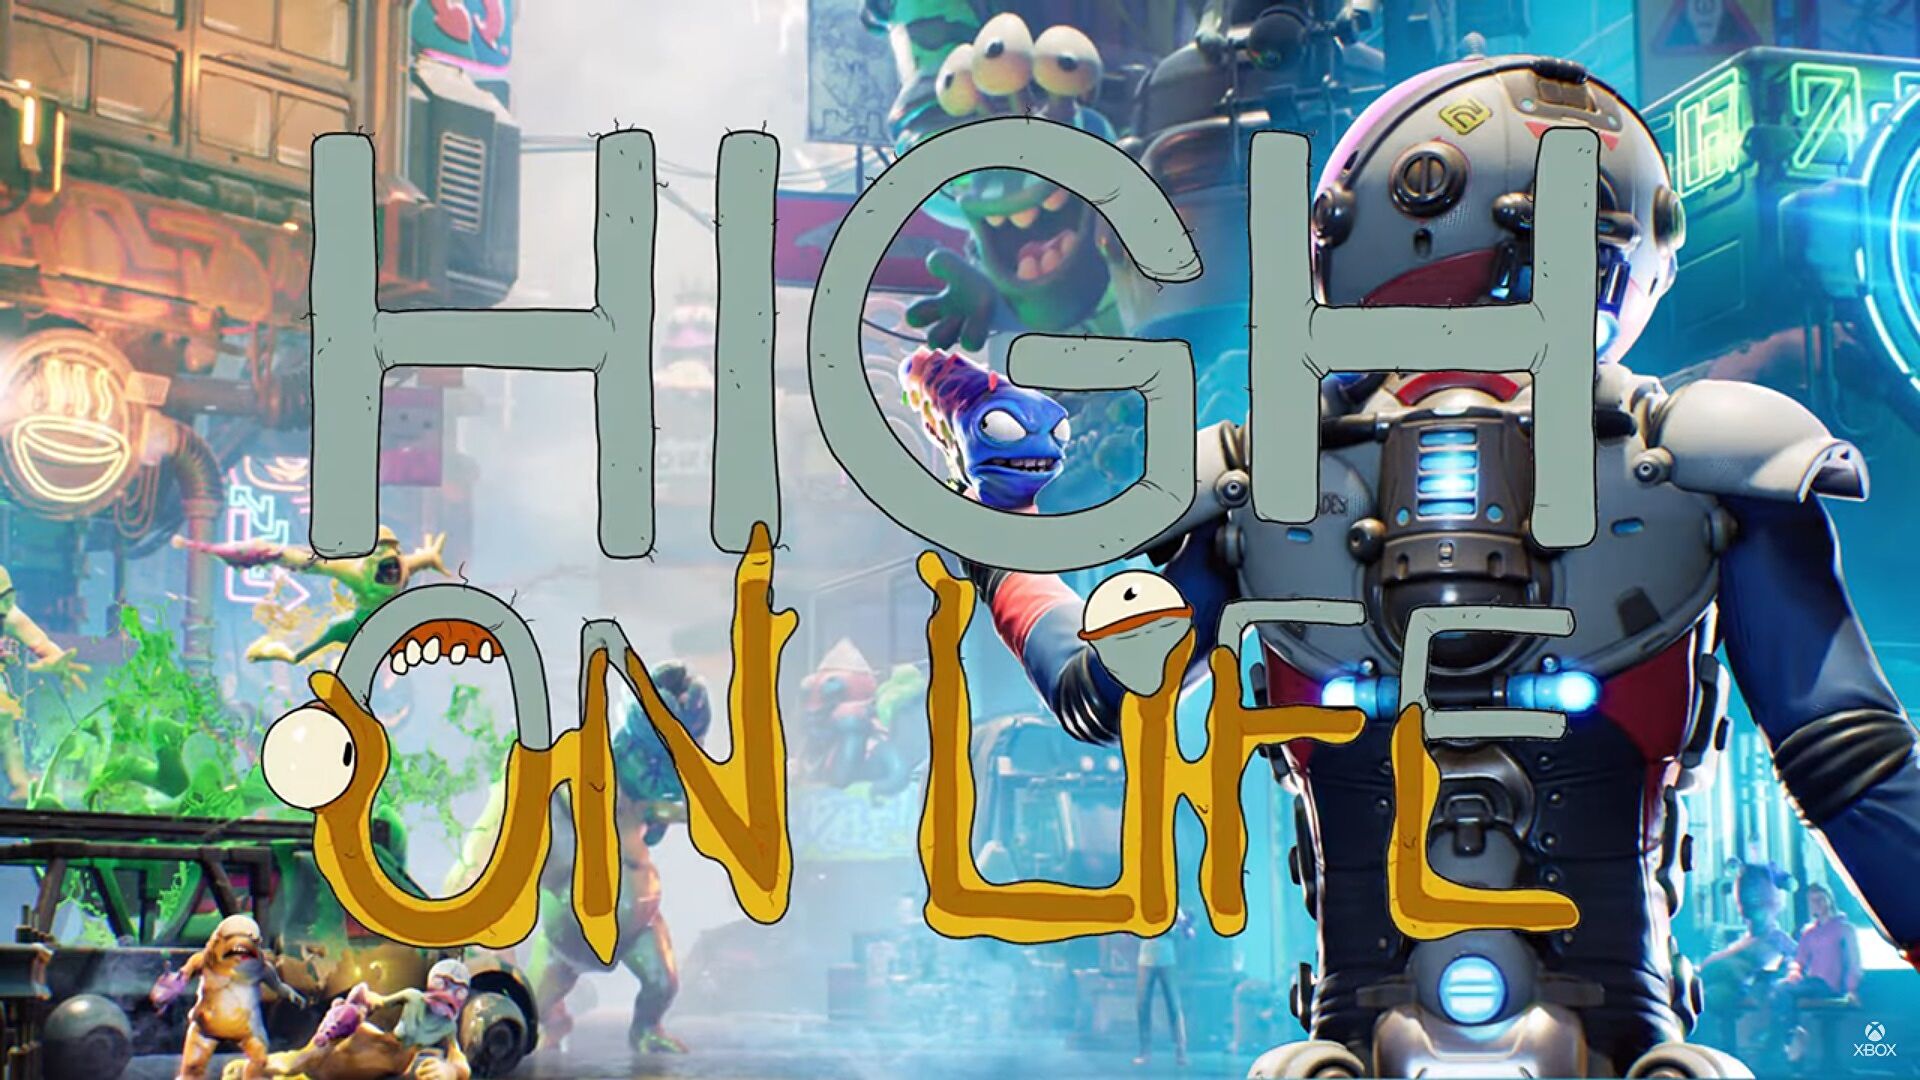 High On Life (@highonlifegame) / X